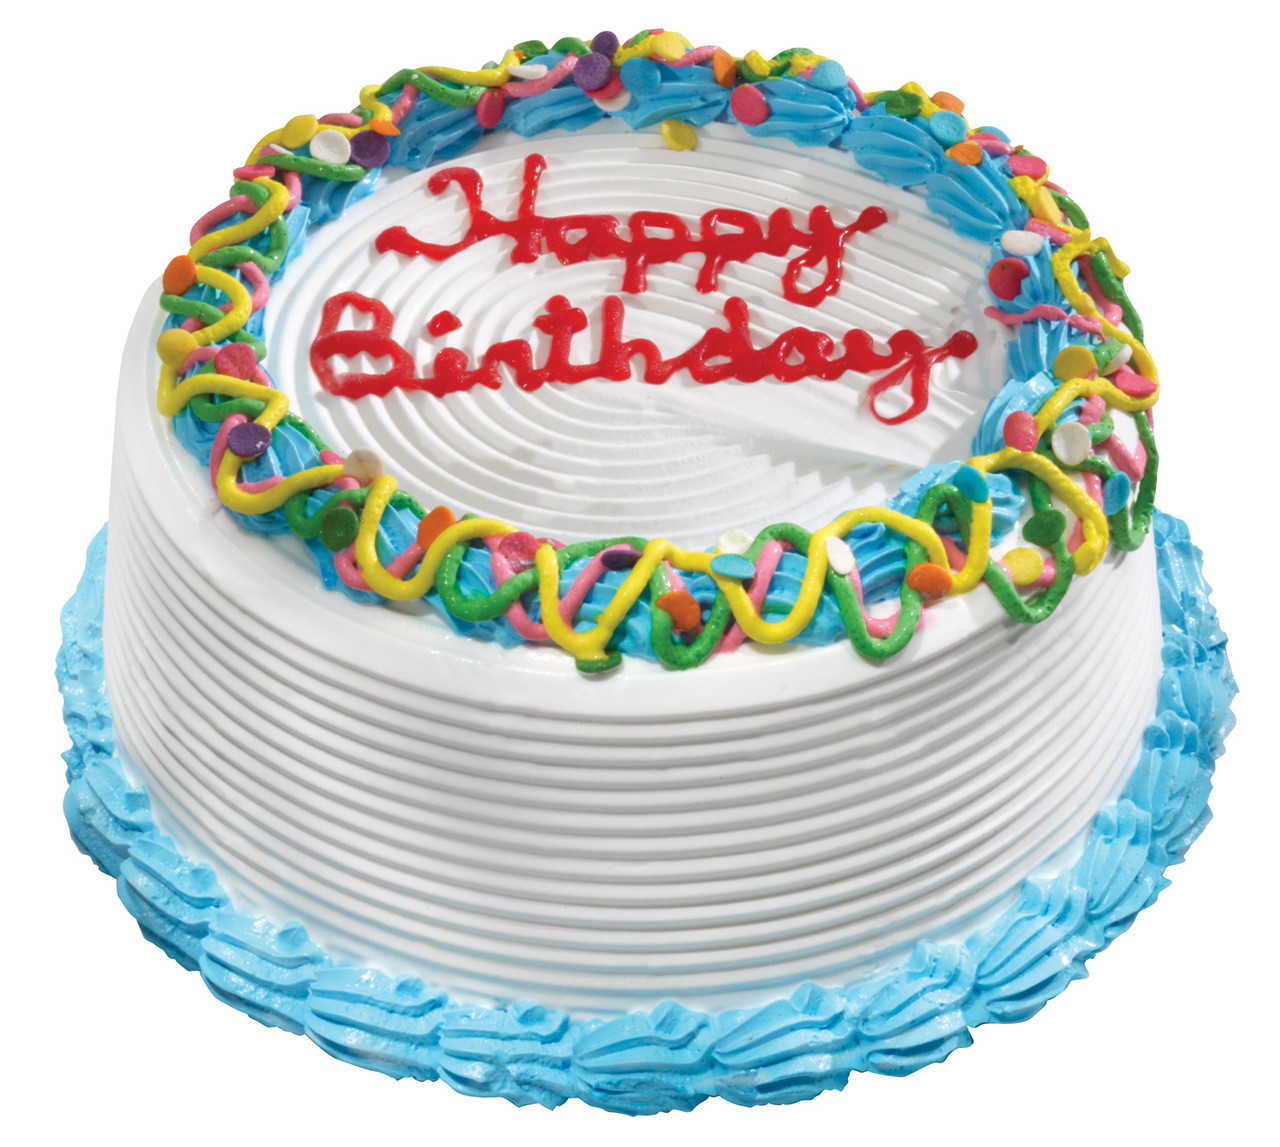 Carvel Birthday Cakes
 Decoration Ideas for Your Ice Cream Cake